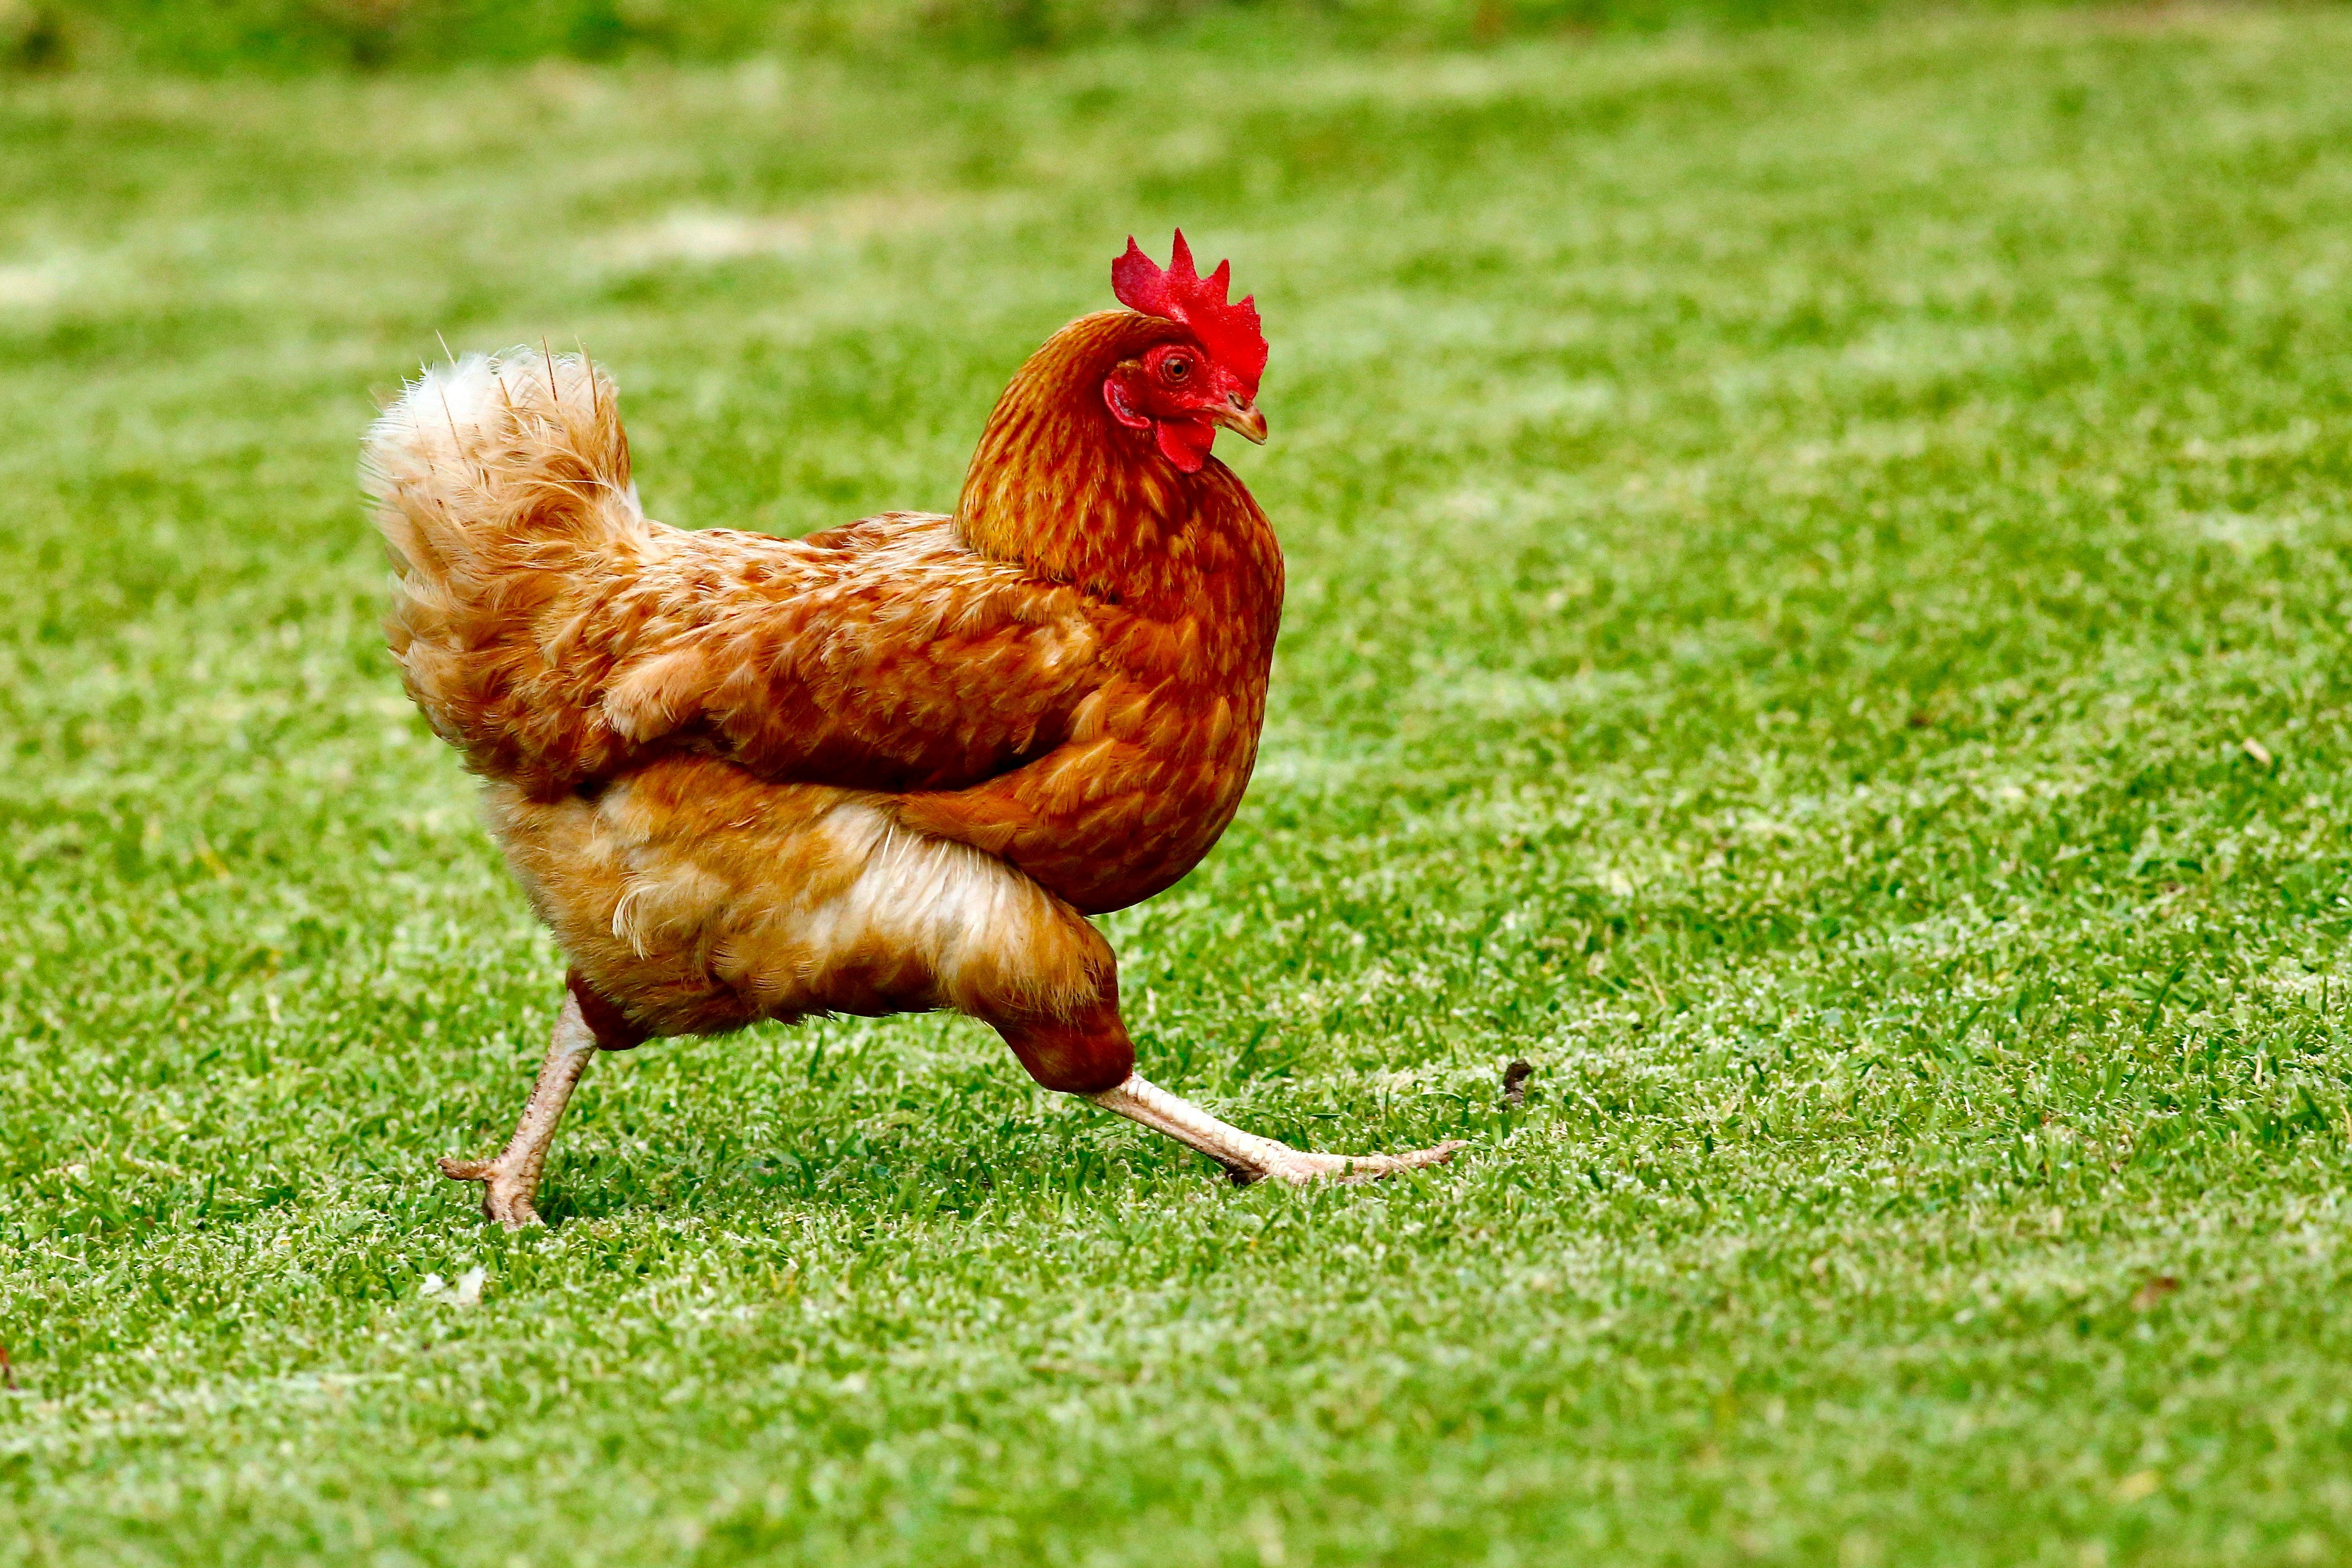 A chicken trotting on grass.